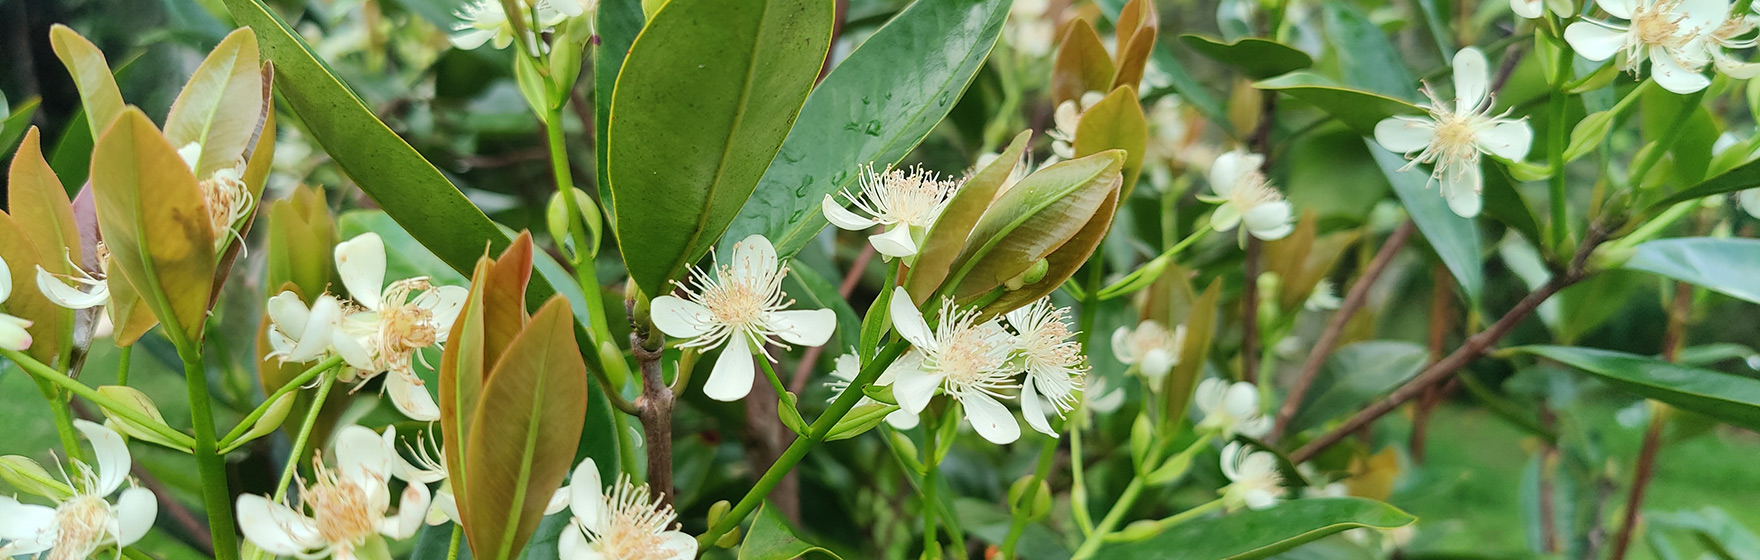 Flowers of Eugenia brasiliensis (Brazilian cherry / grumichama)